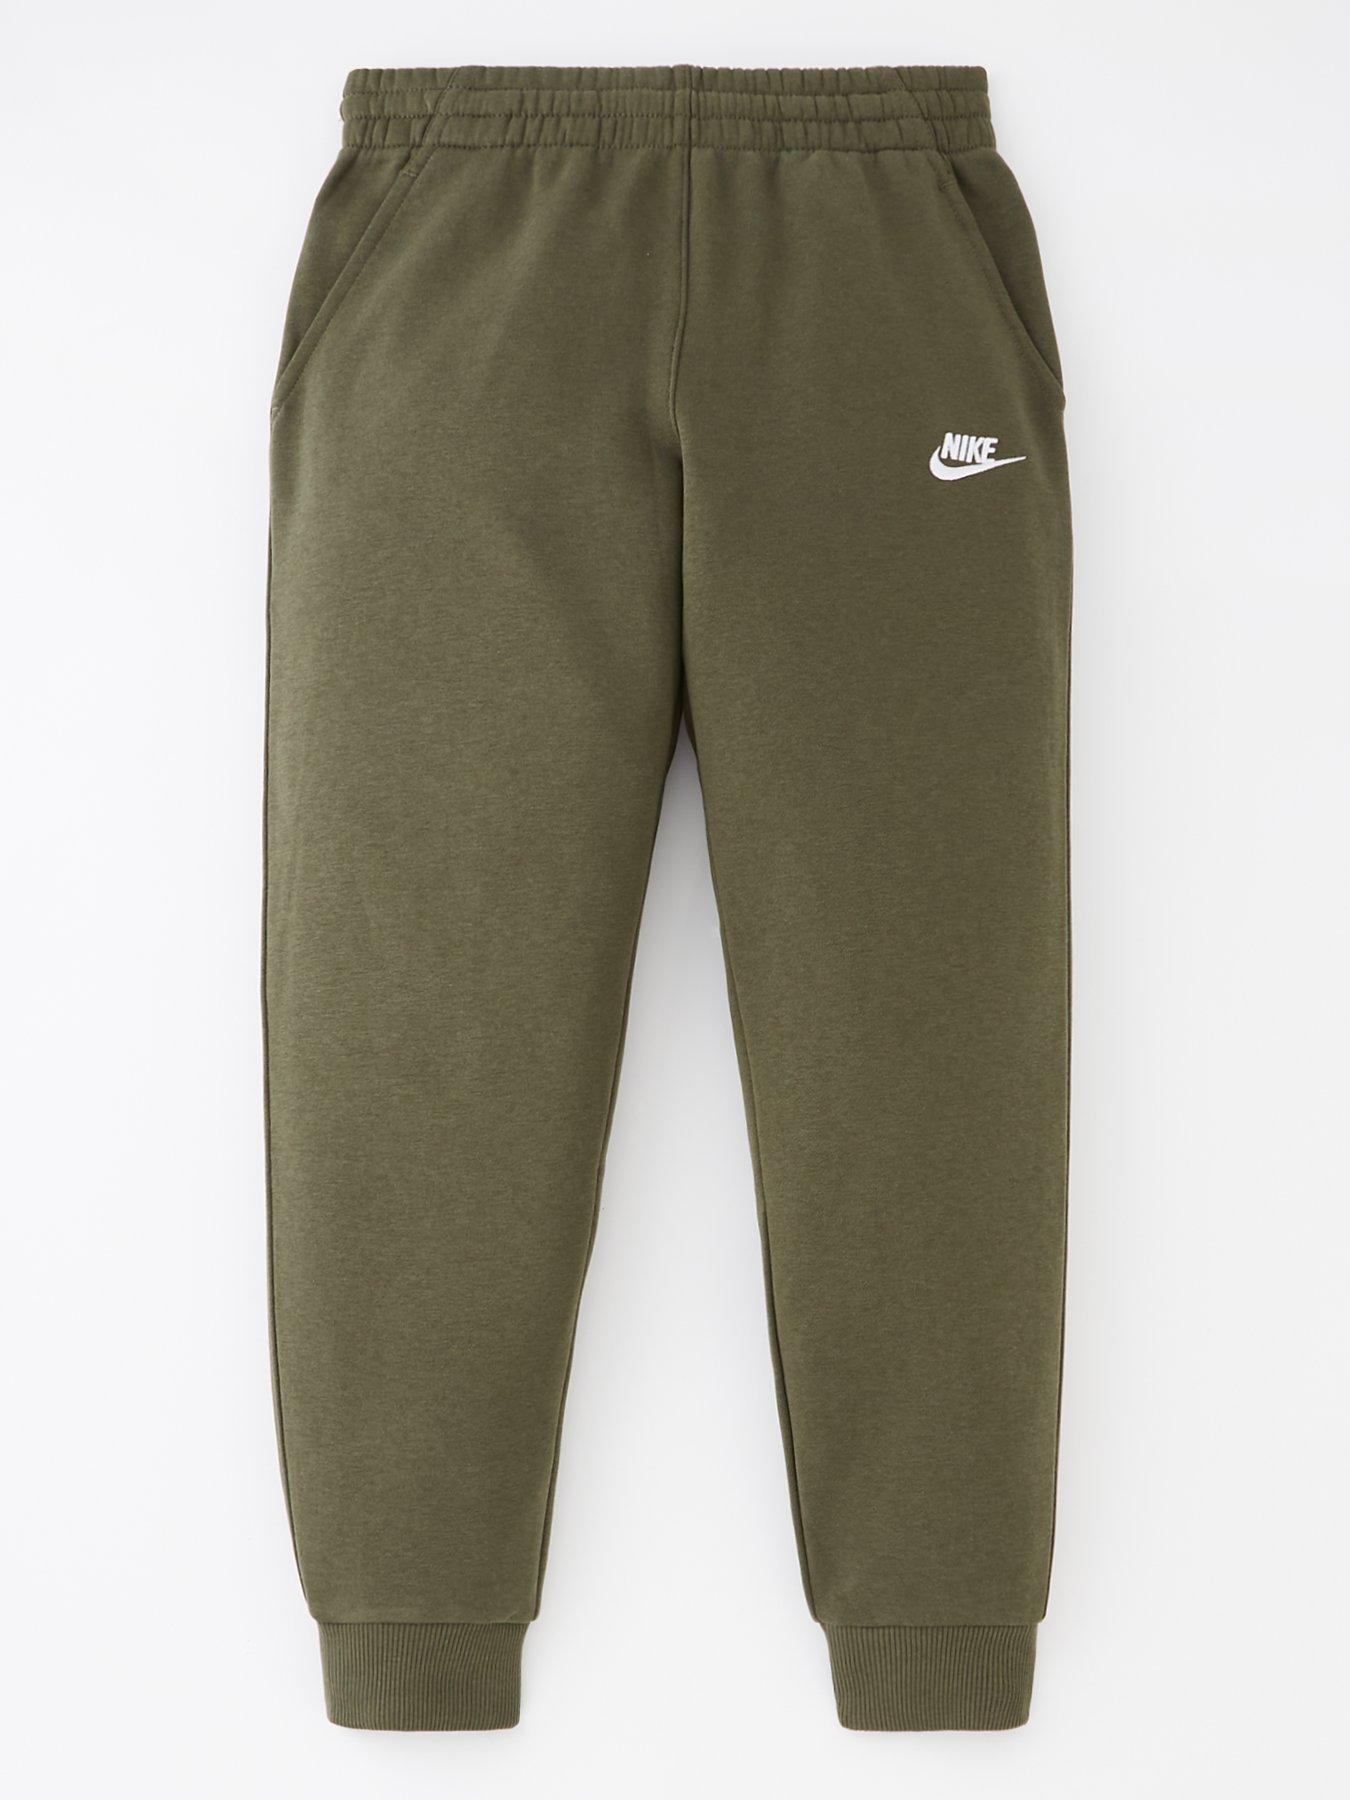 Nike Swoosh fleece joggers in brown